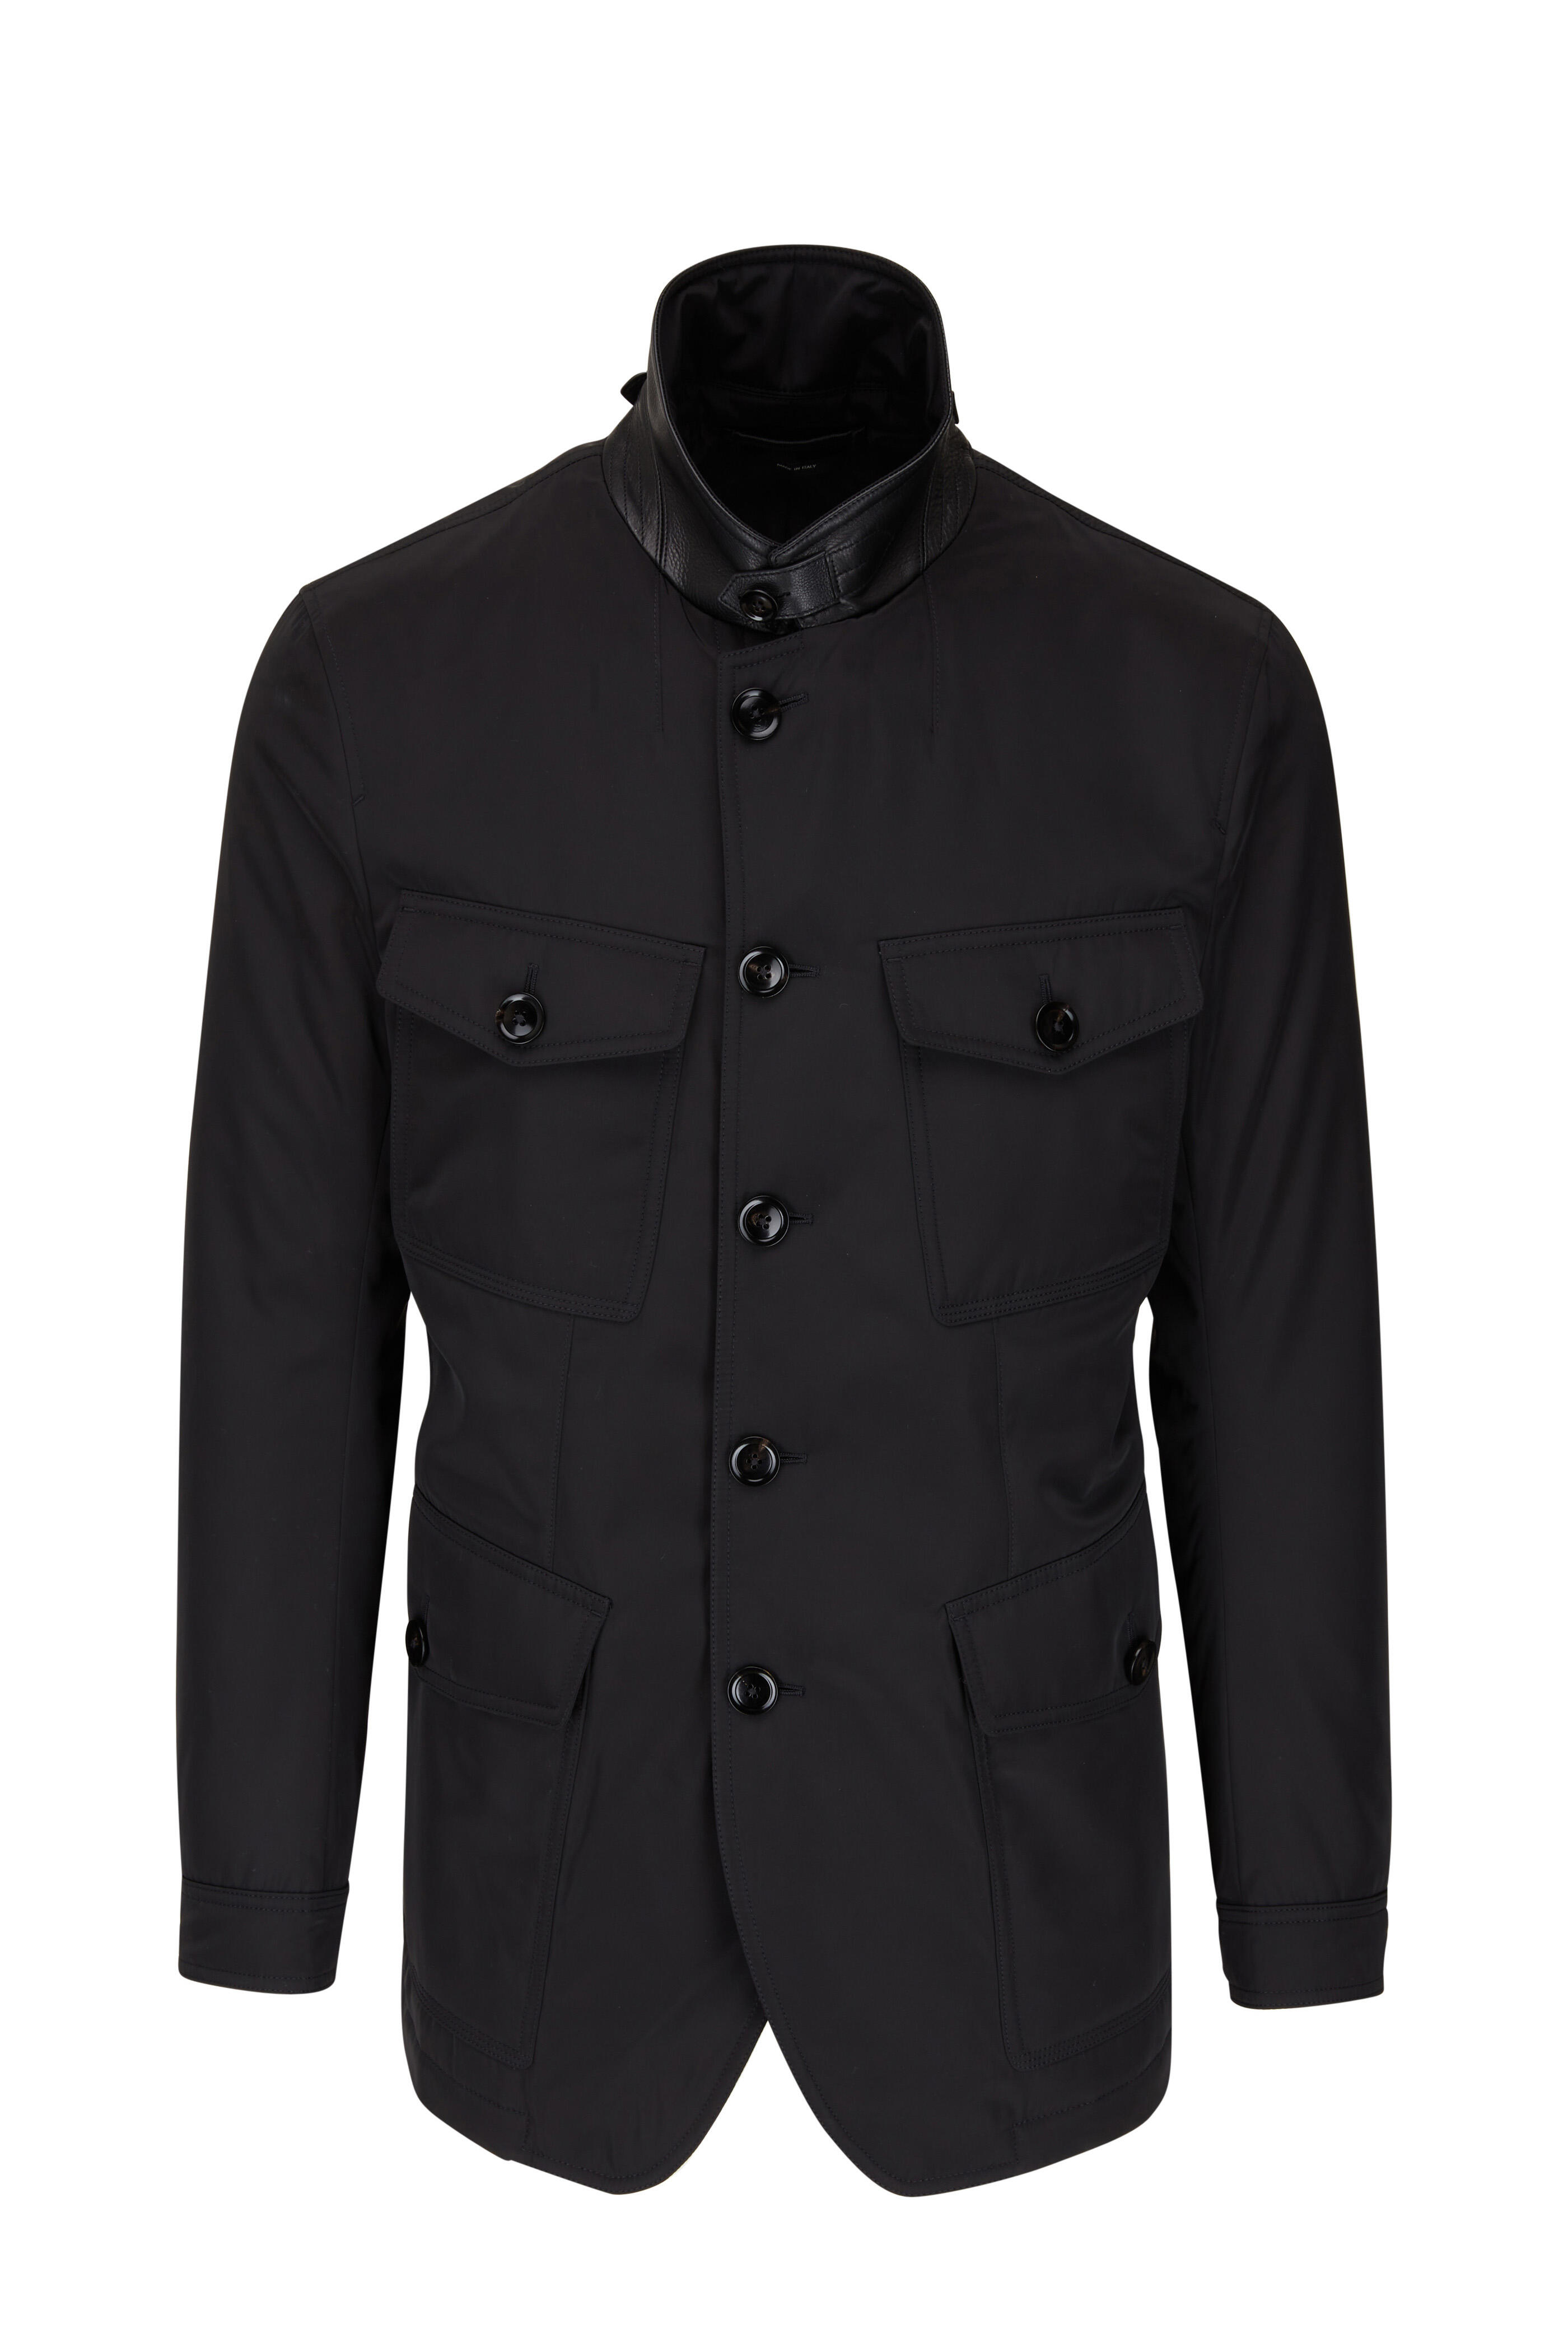 Tom Ford - Black Techno Nylon & Leather Jacket | Mitchell Stores